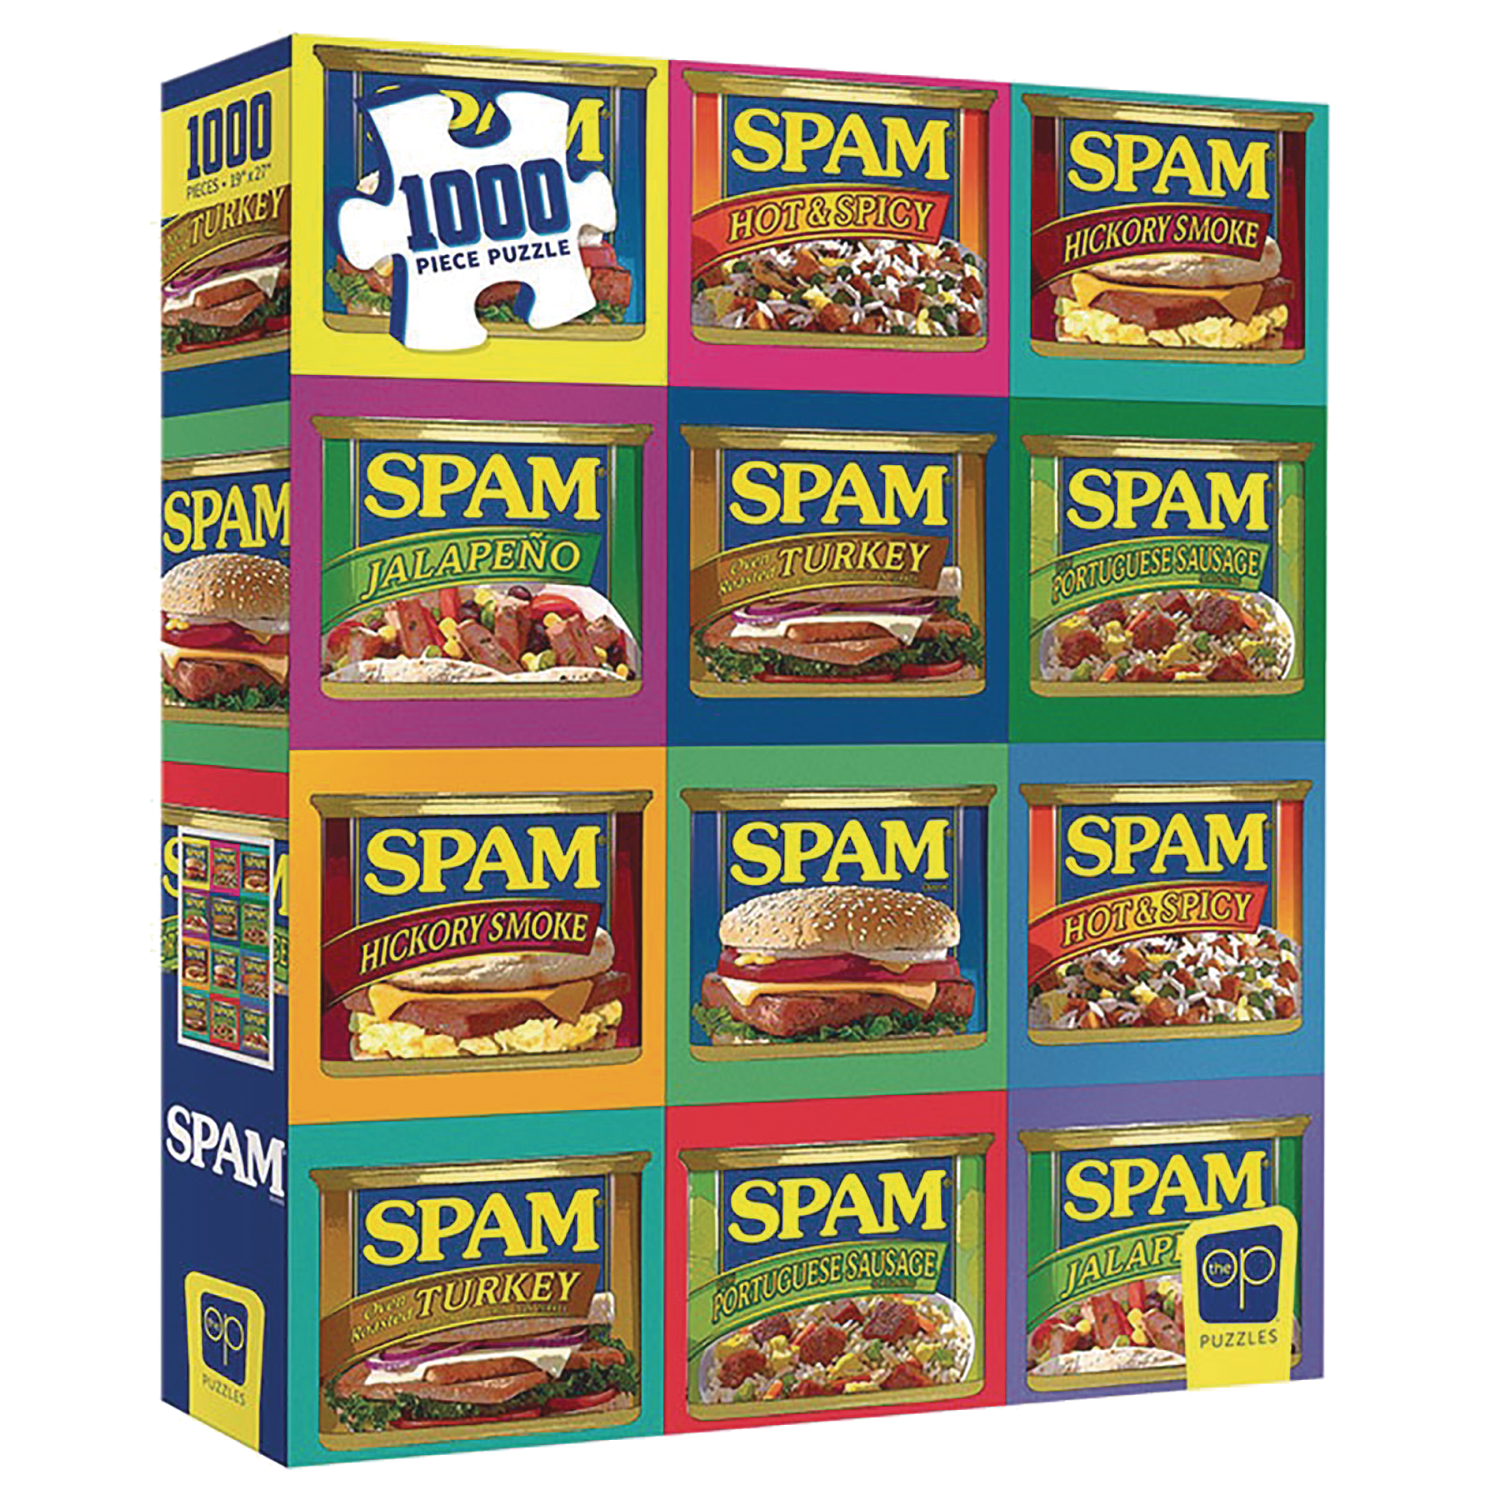 Spam Brand Sizzle Pork & Mmm 1000 Piece Puzzle